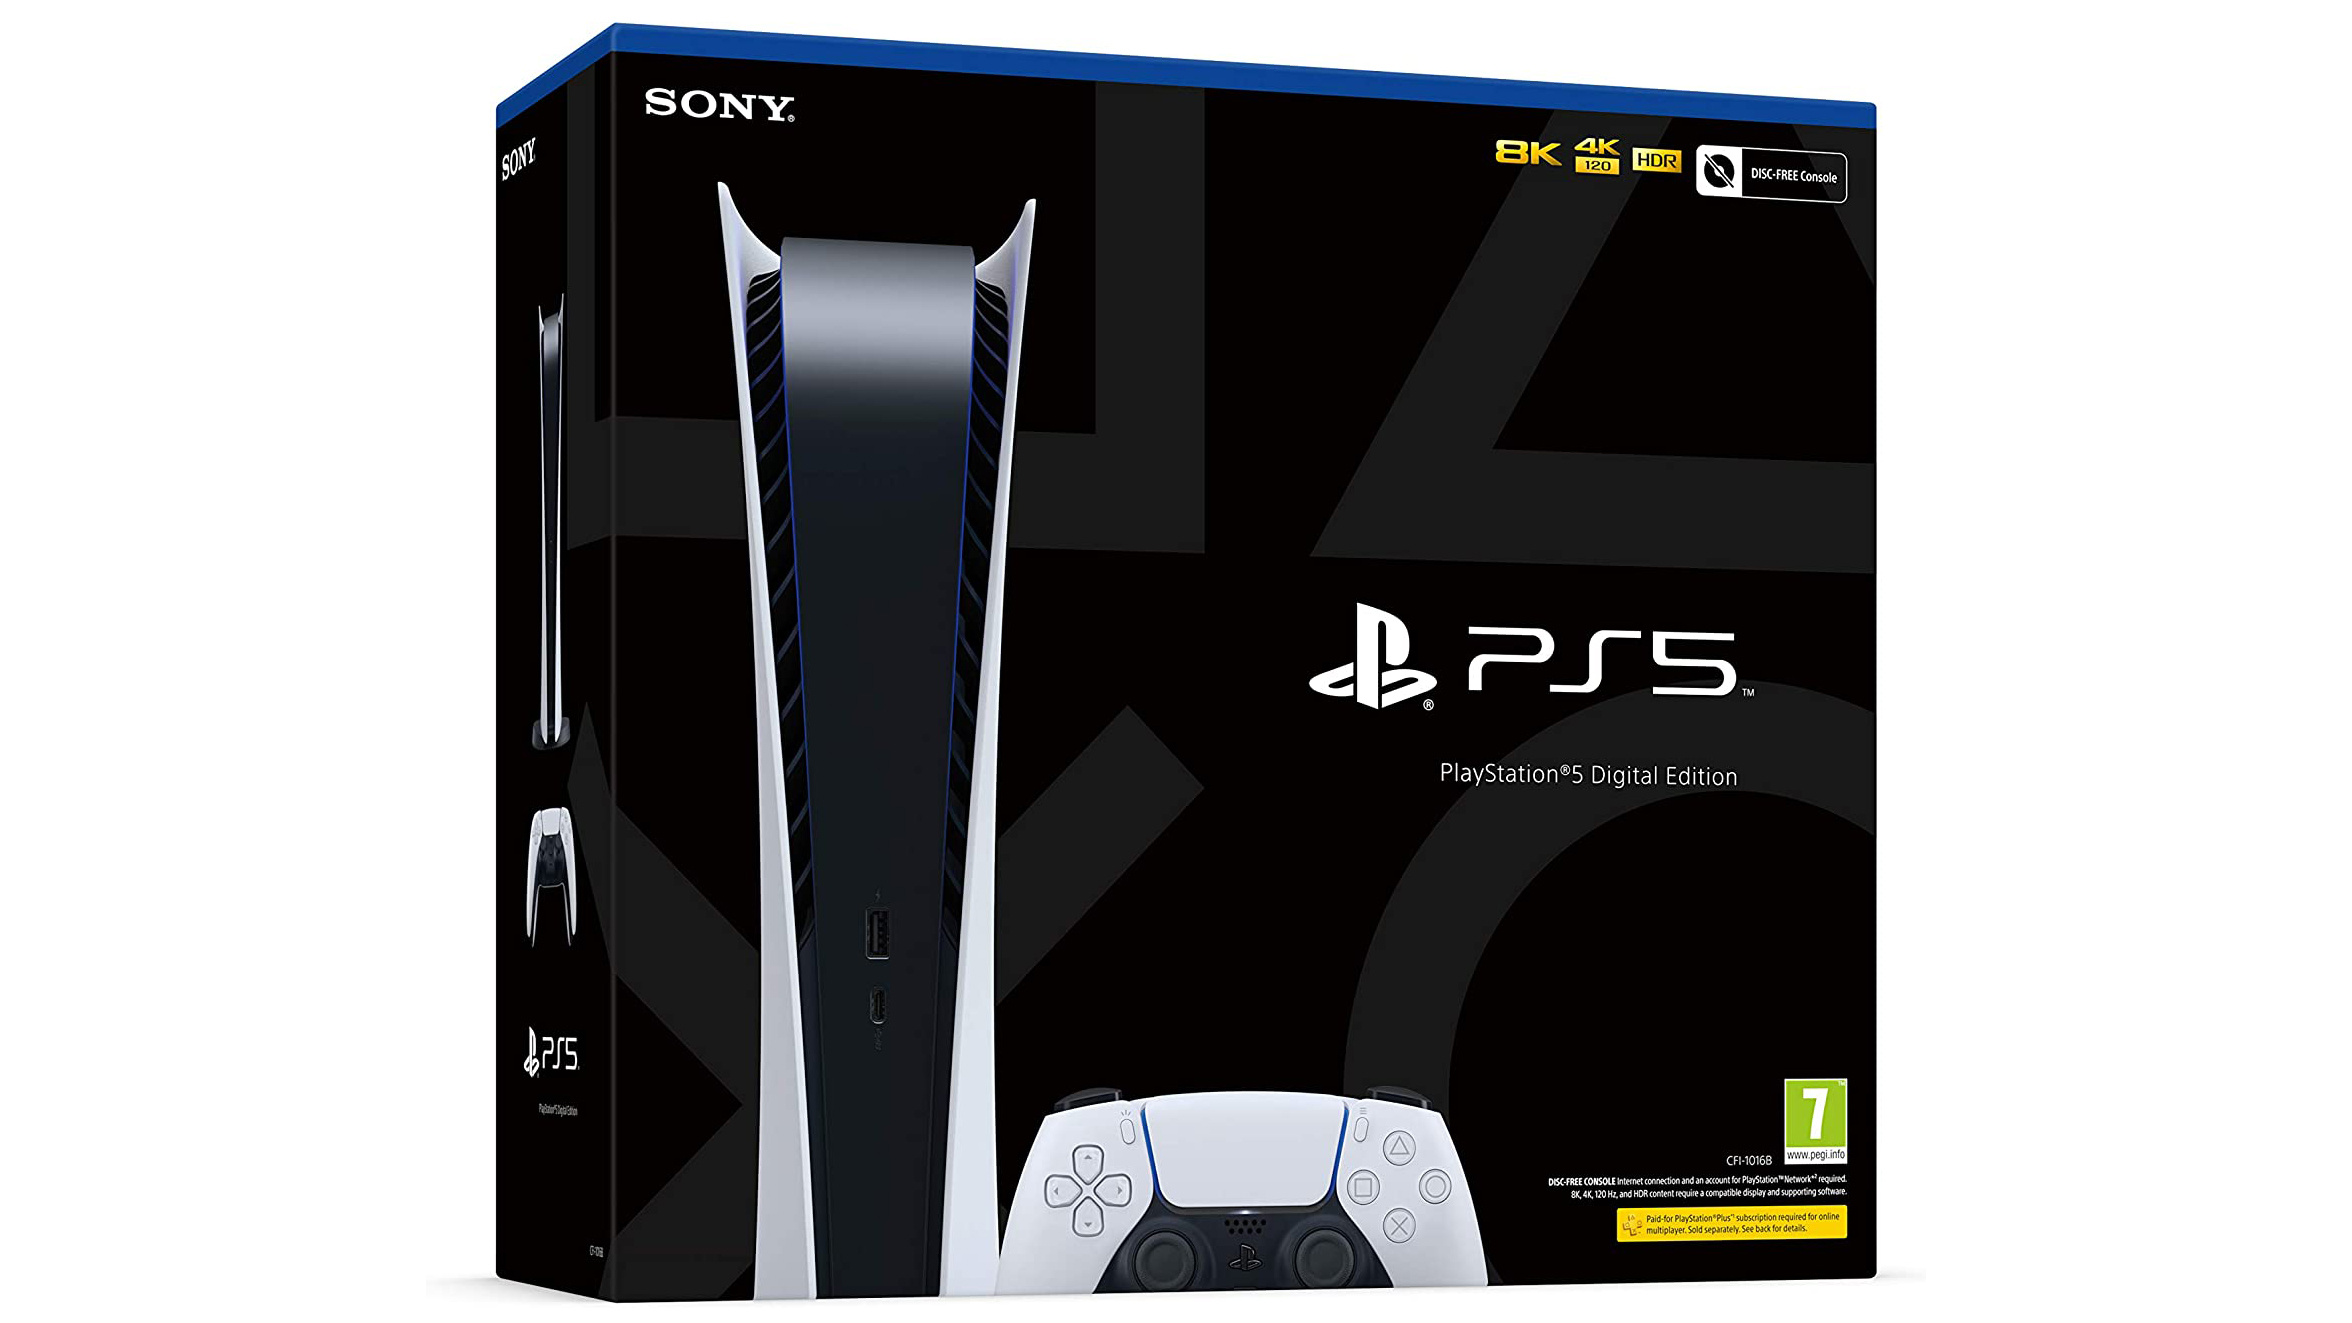 PS5 Digital Edition boxed